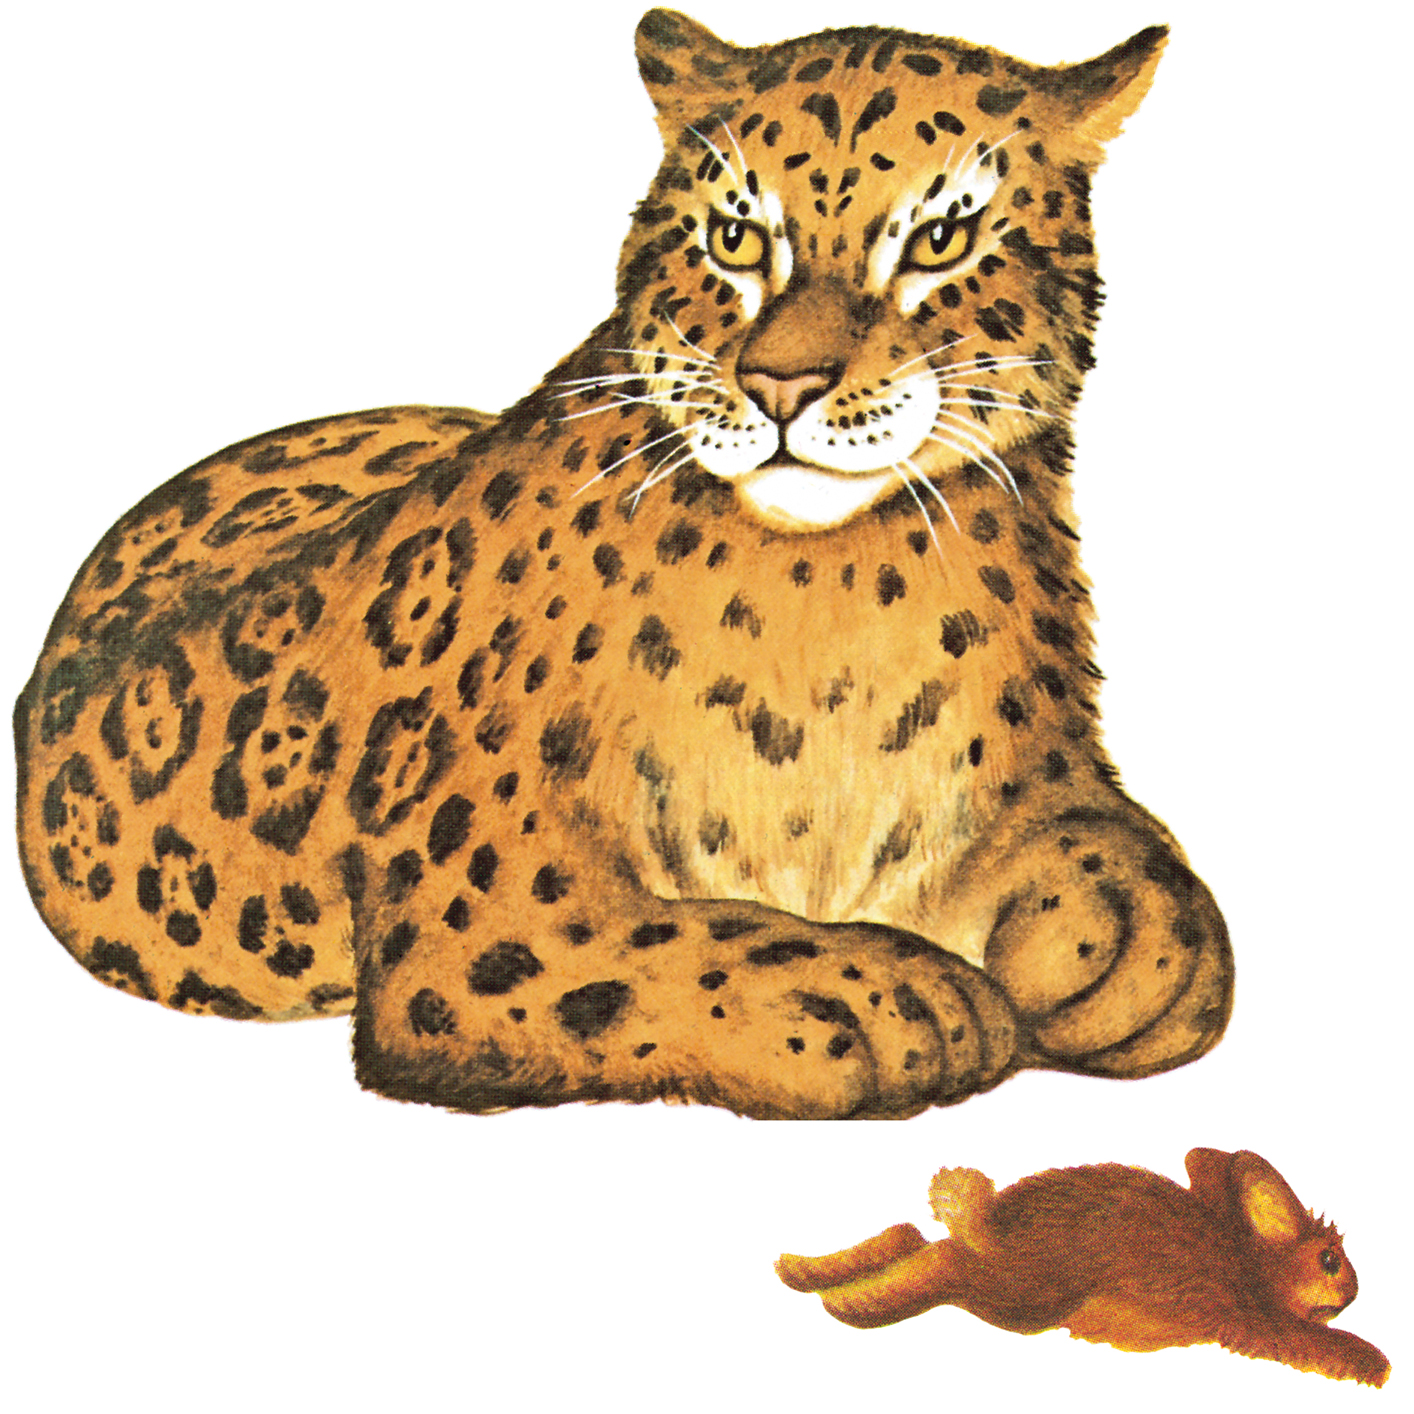 Jj for jaguar - photo 26